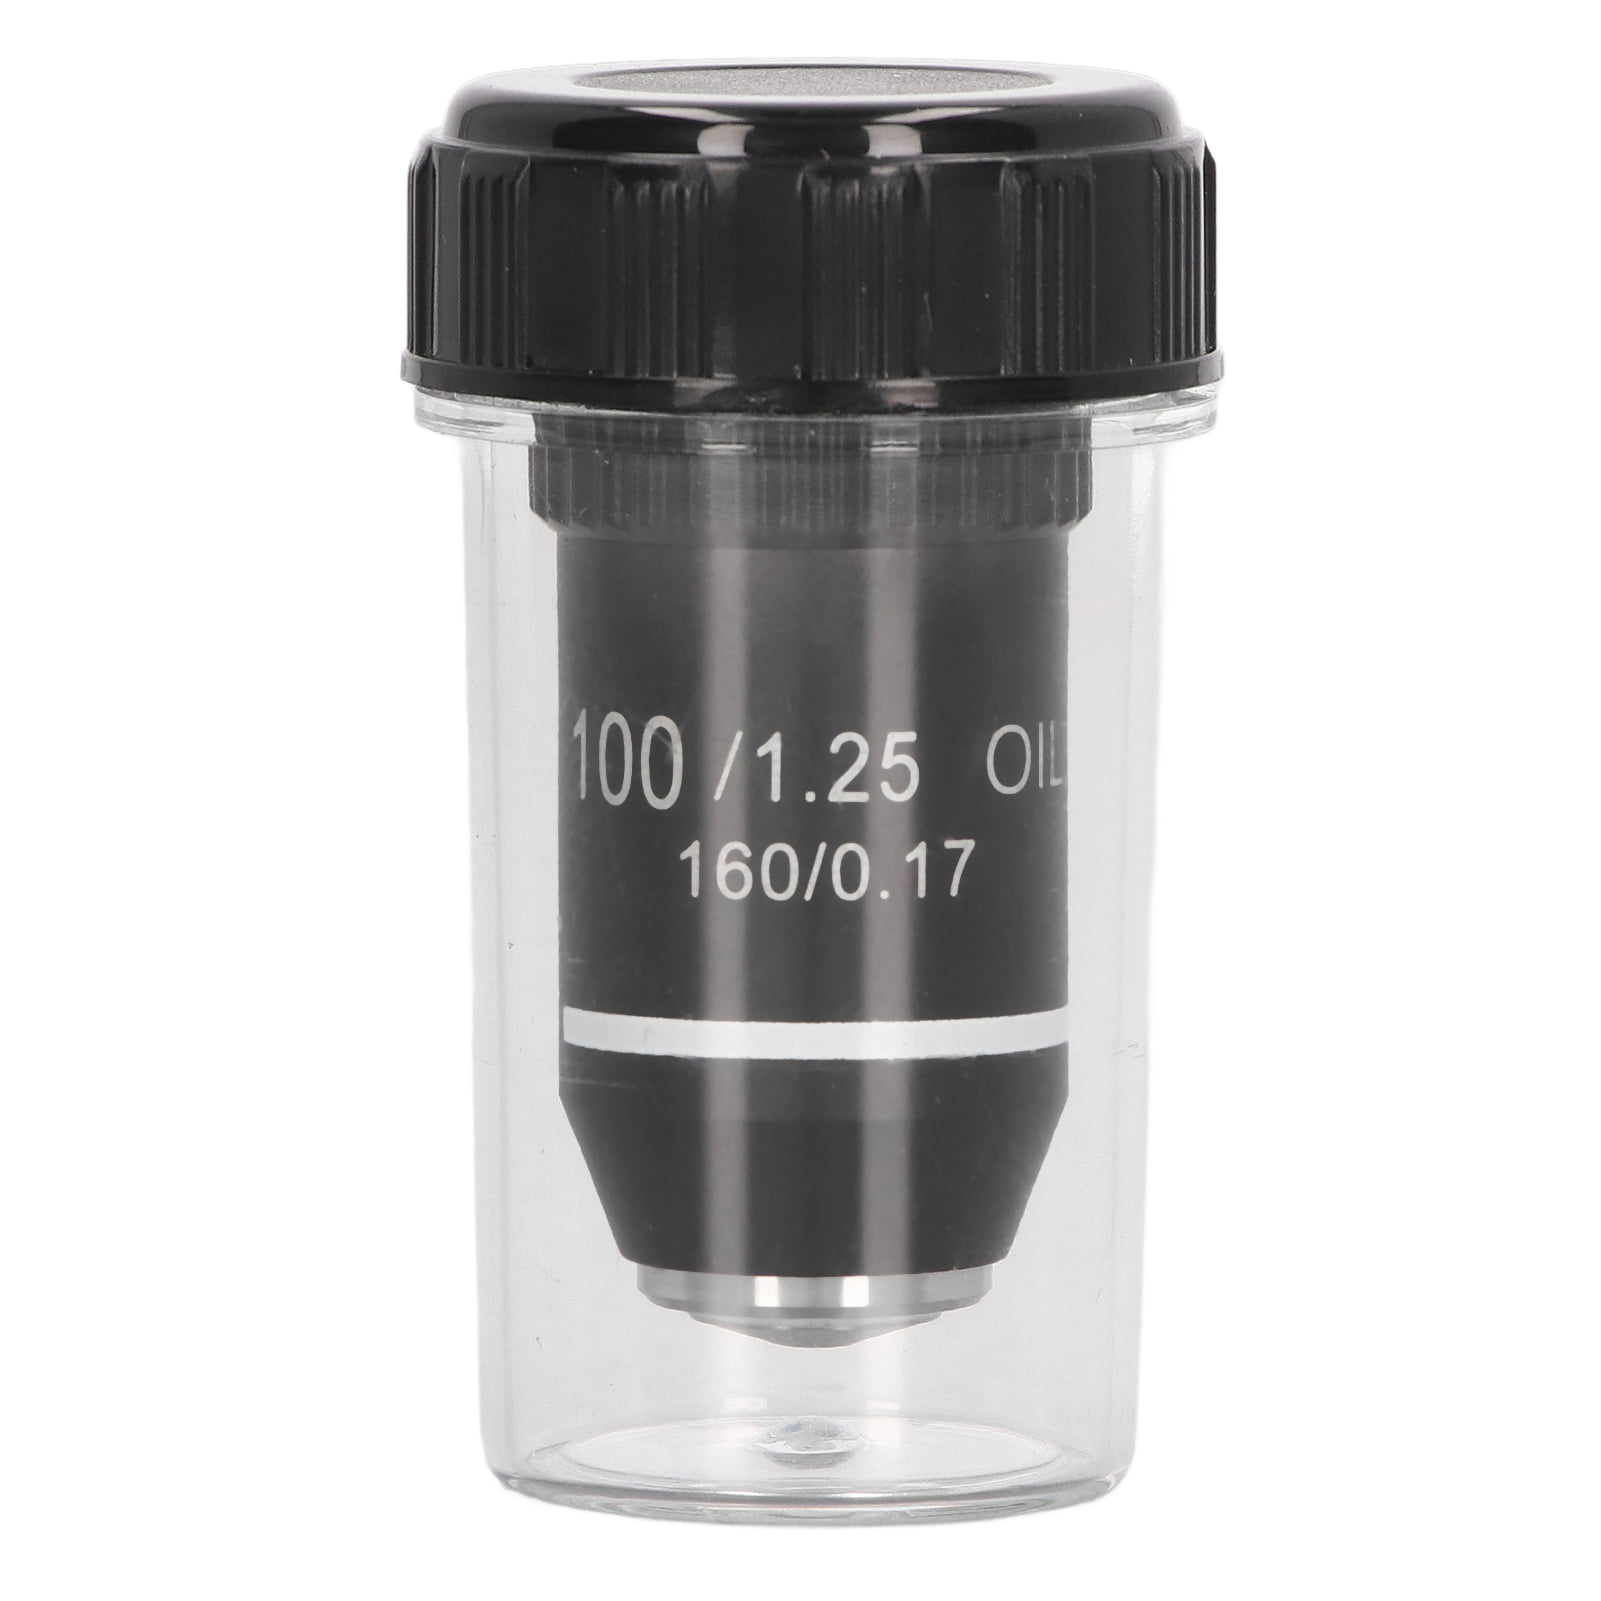 Microscope de poche à LED zoom x 100 Lumagny - Hydrozone